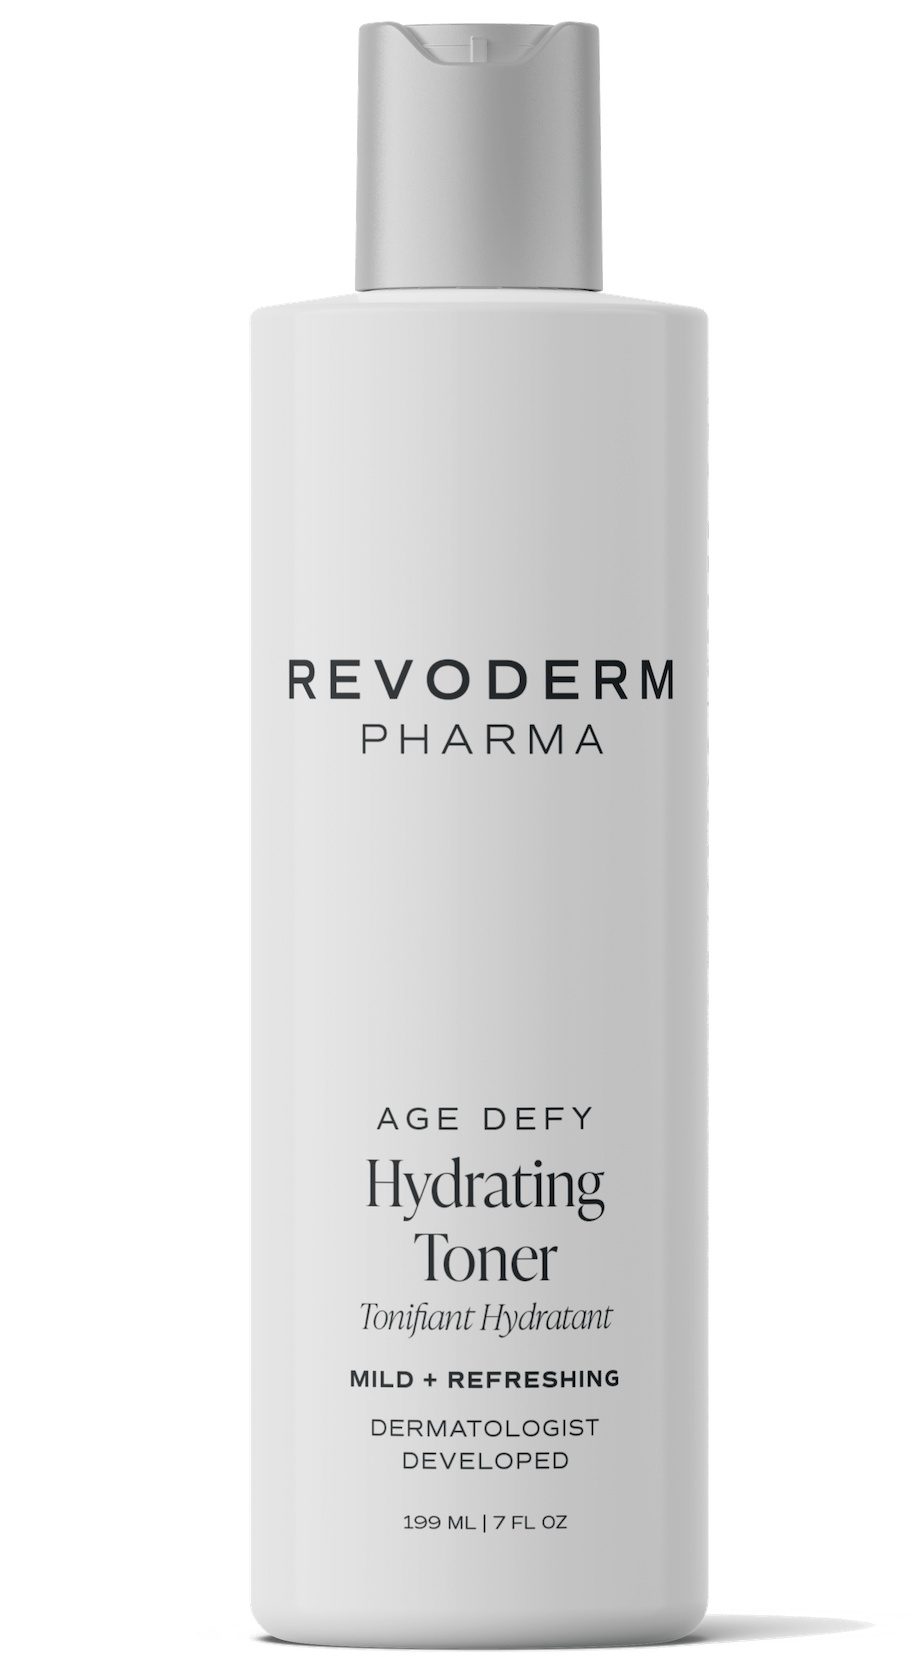 Revoderm Age Defy Hydrating Toner